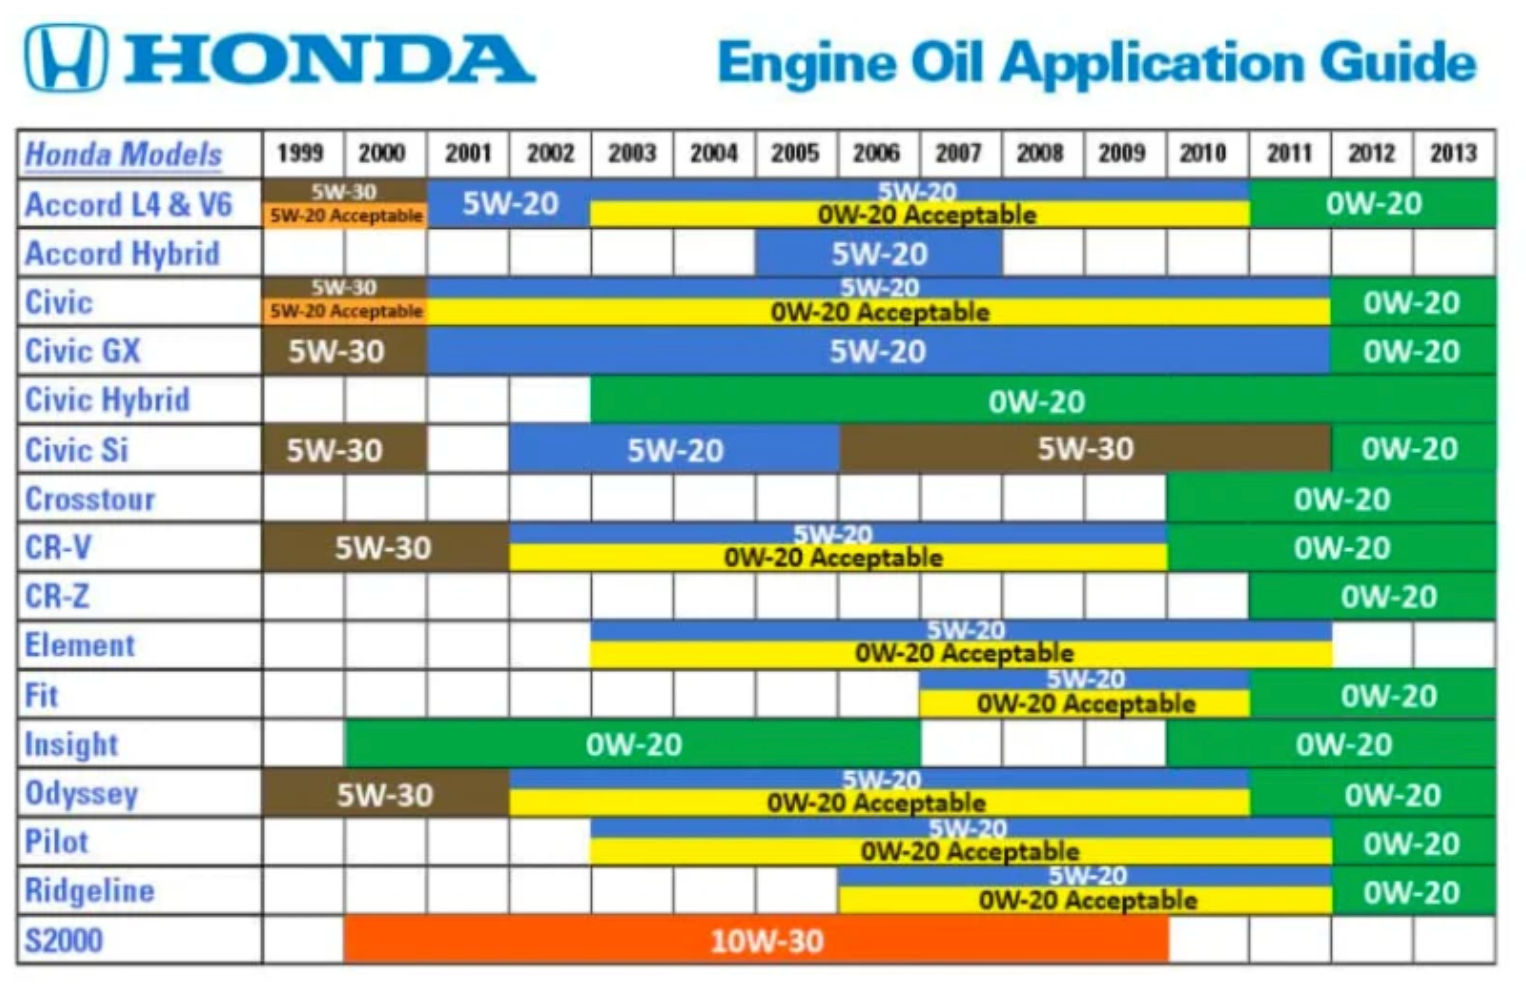 honda engine oil application guide